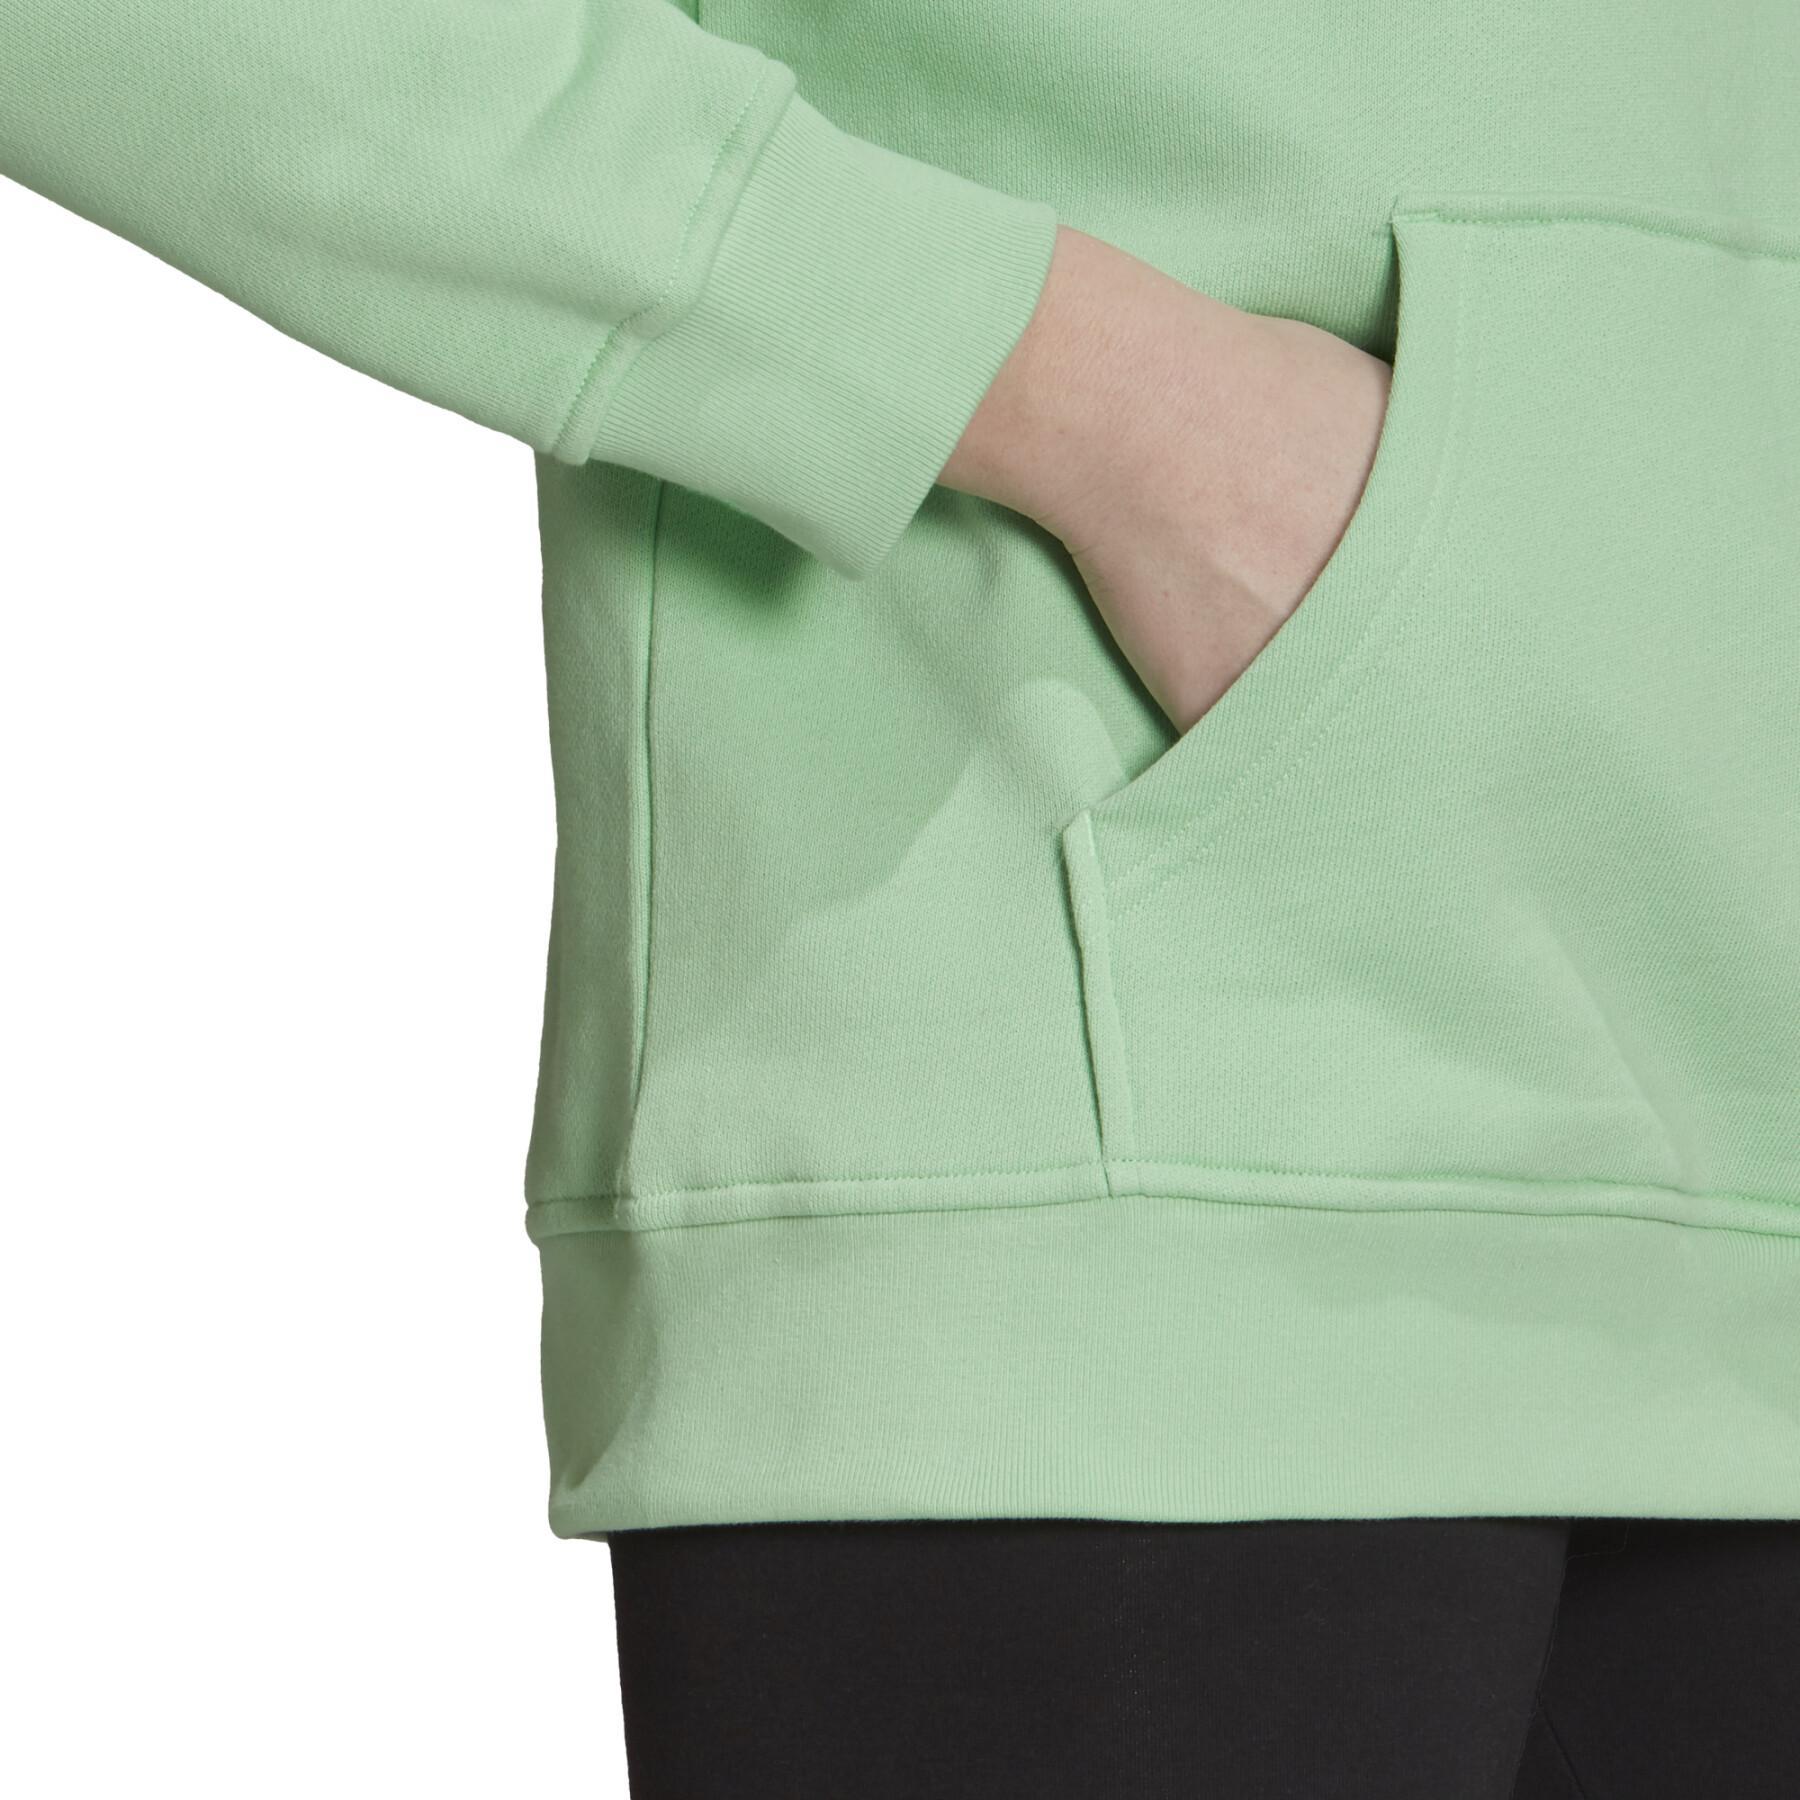 Women's hooded sweatshirt adidas Originals Adicolor Essentials